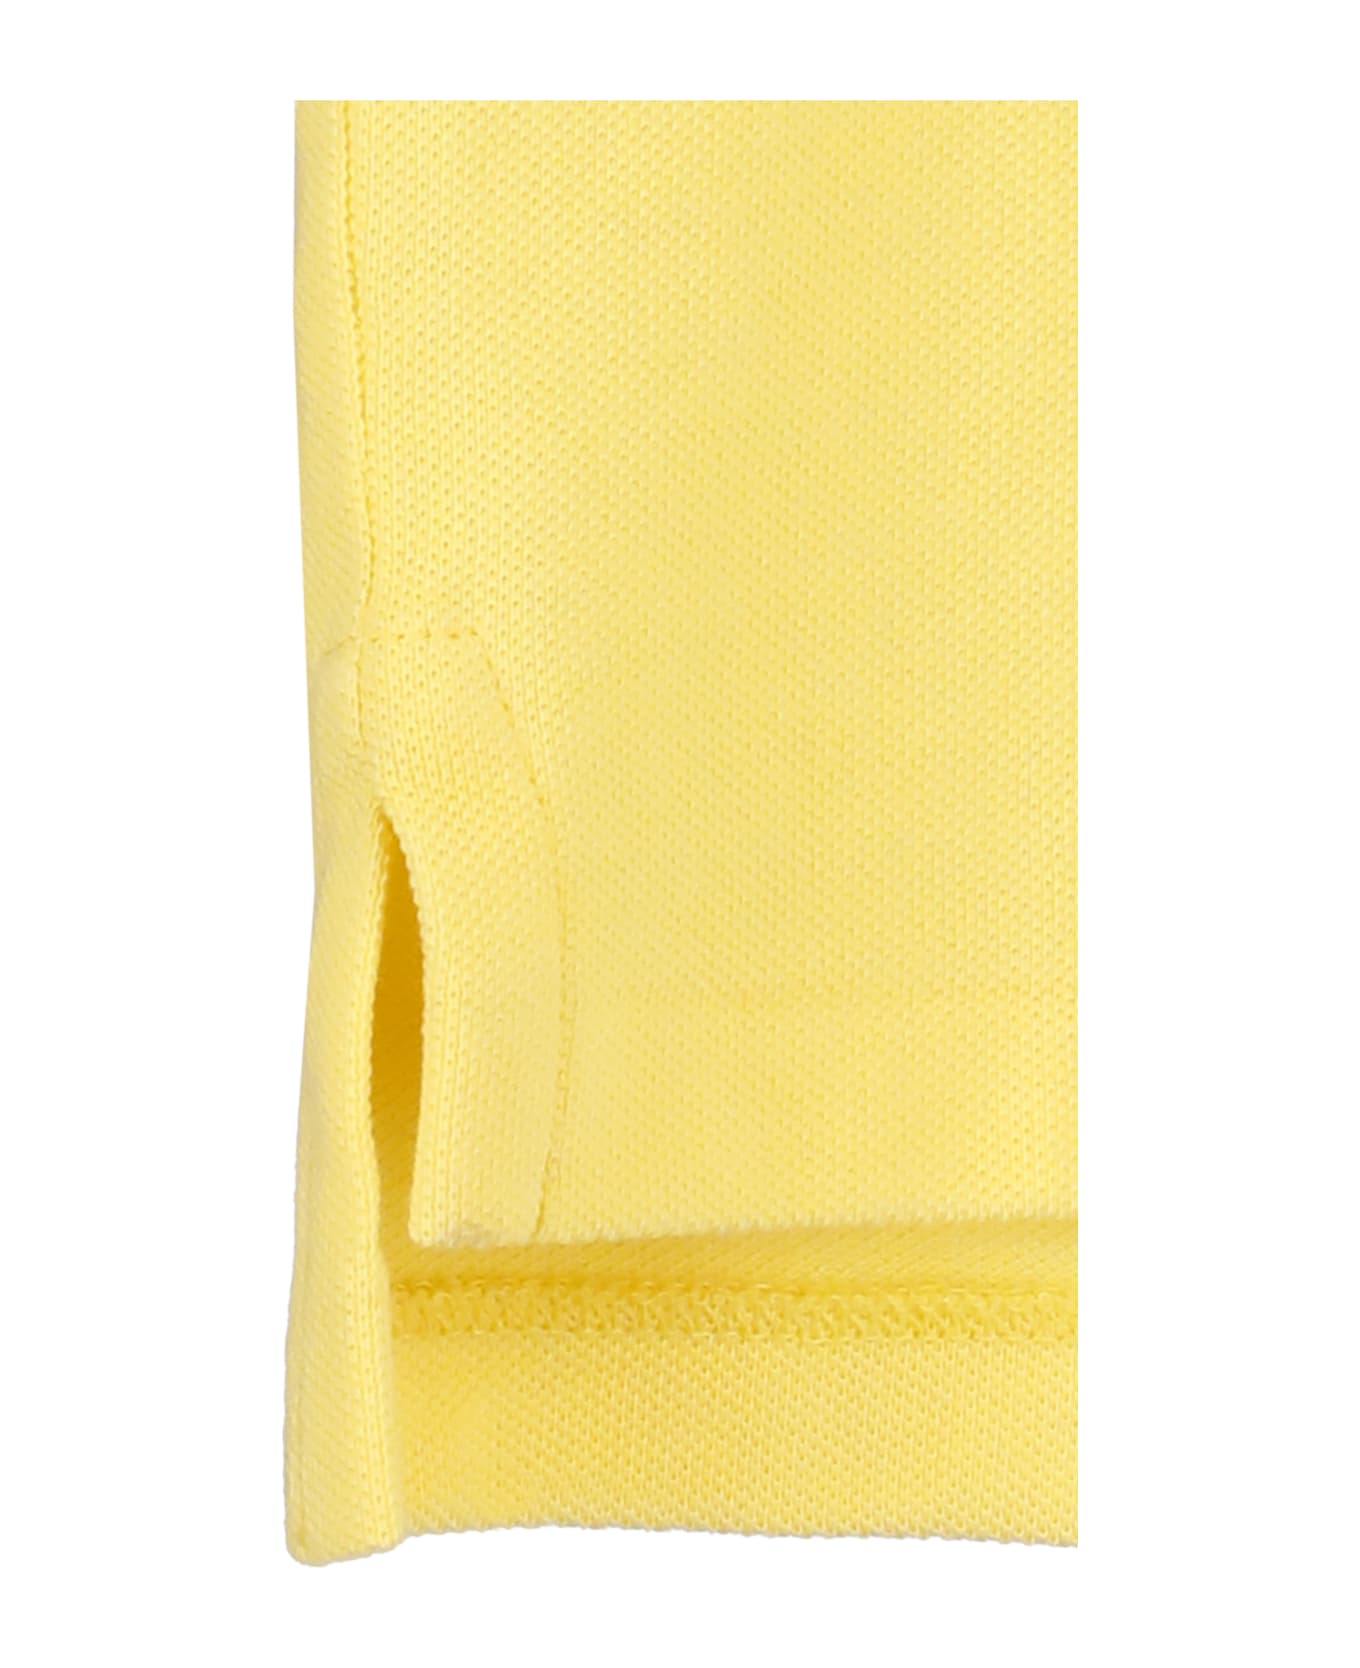 Ralph Lauren Slim-fit Polo Shirt In Oasis Yellow Piqué - Yellow ポロシャツ